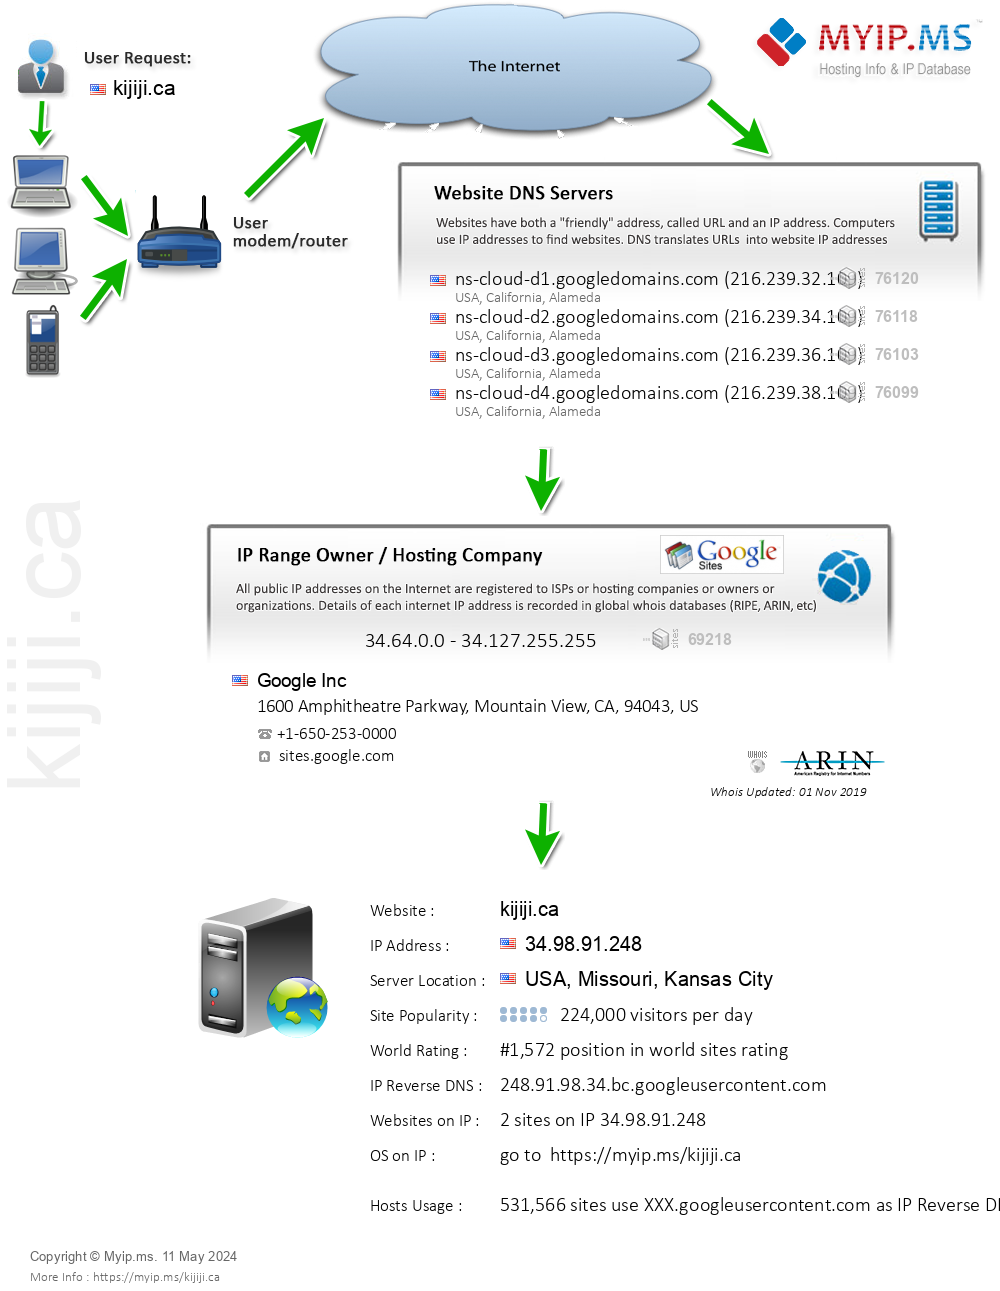 Kijiji.ca - Website Hosting Visual IP Diagram